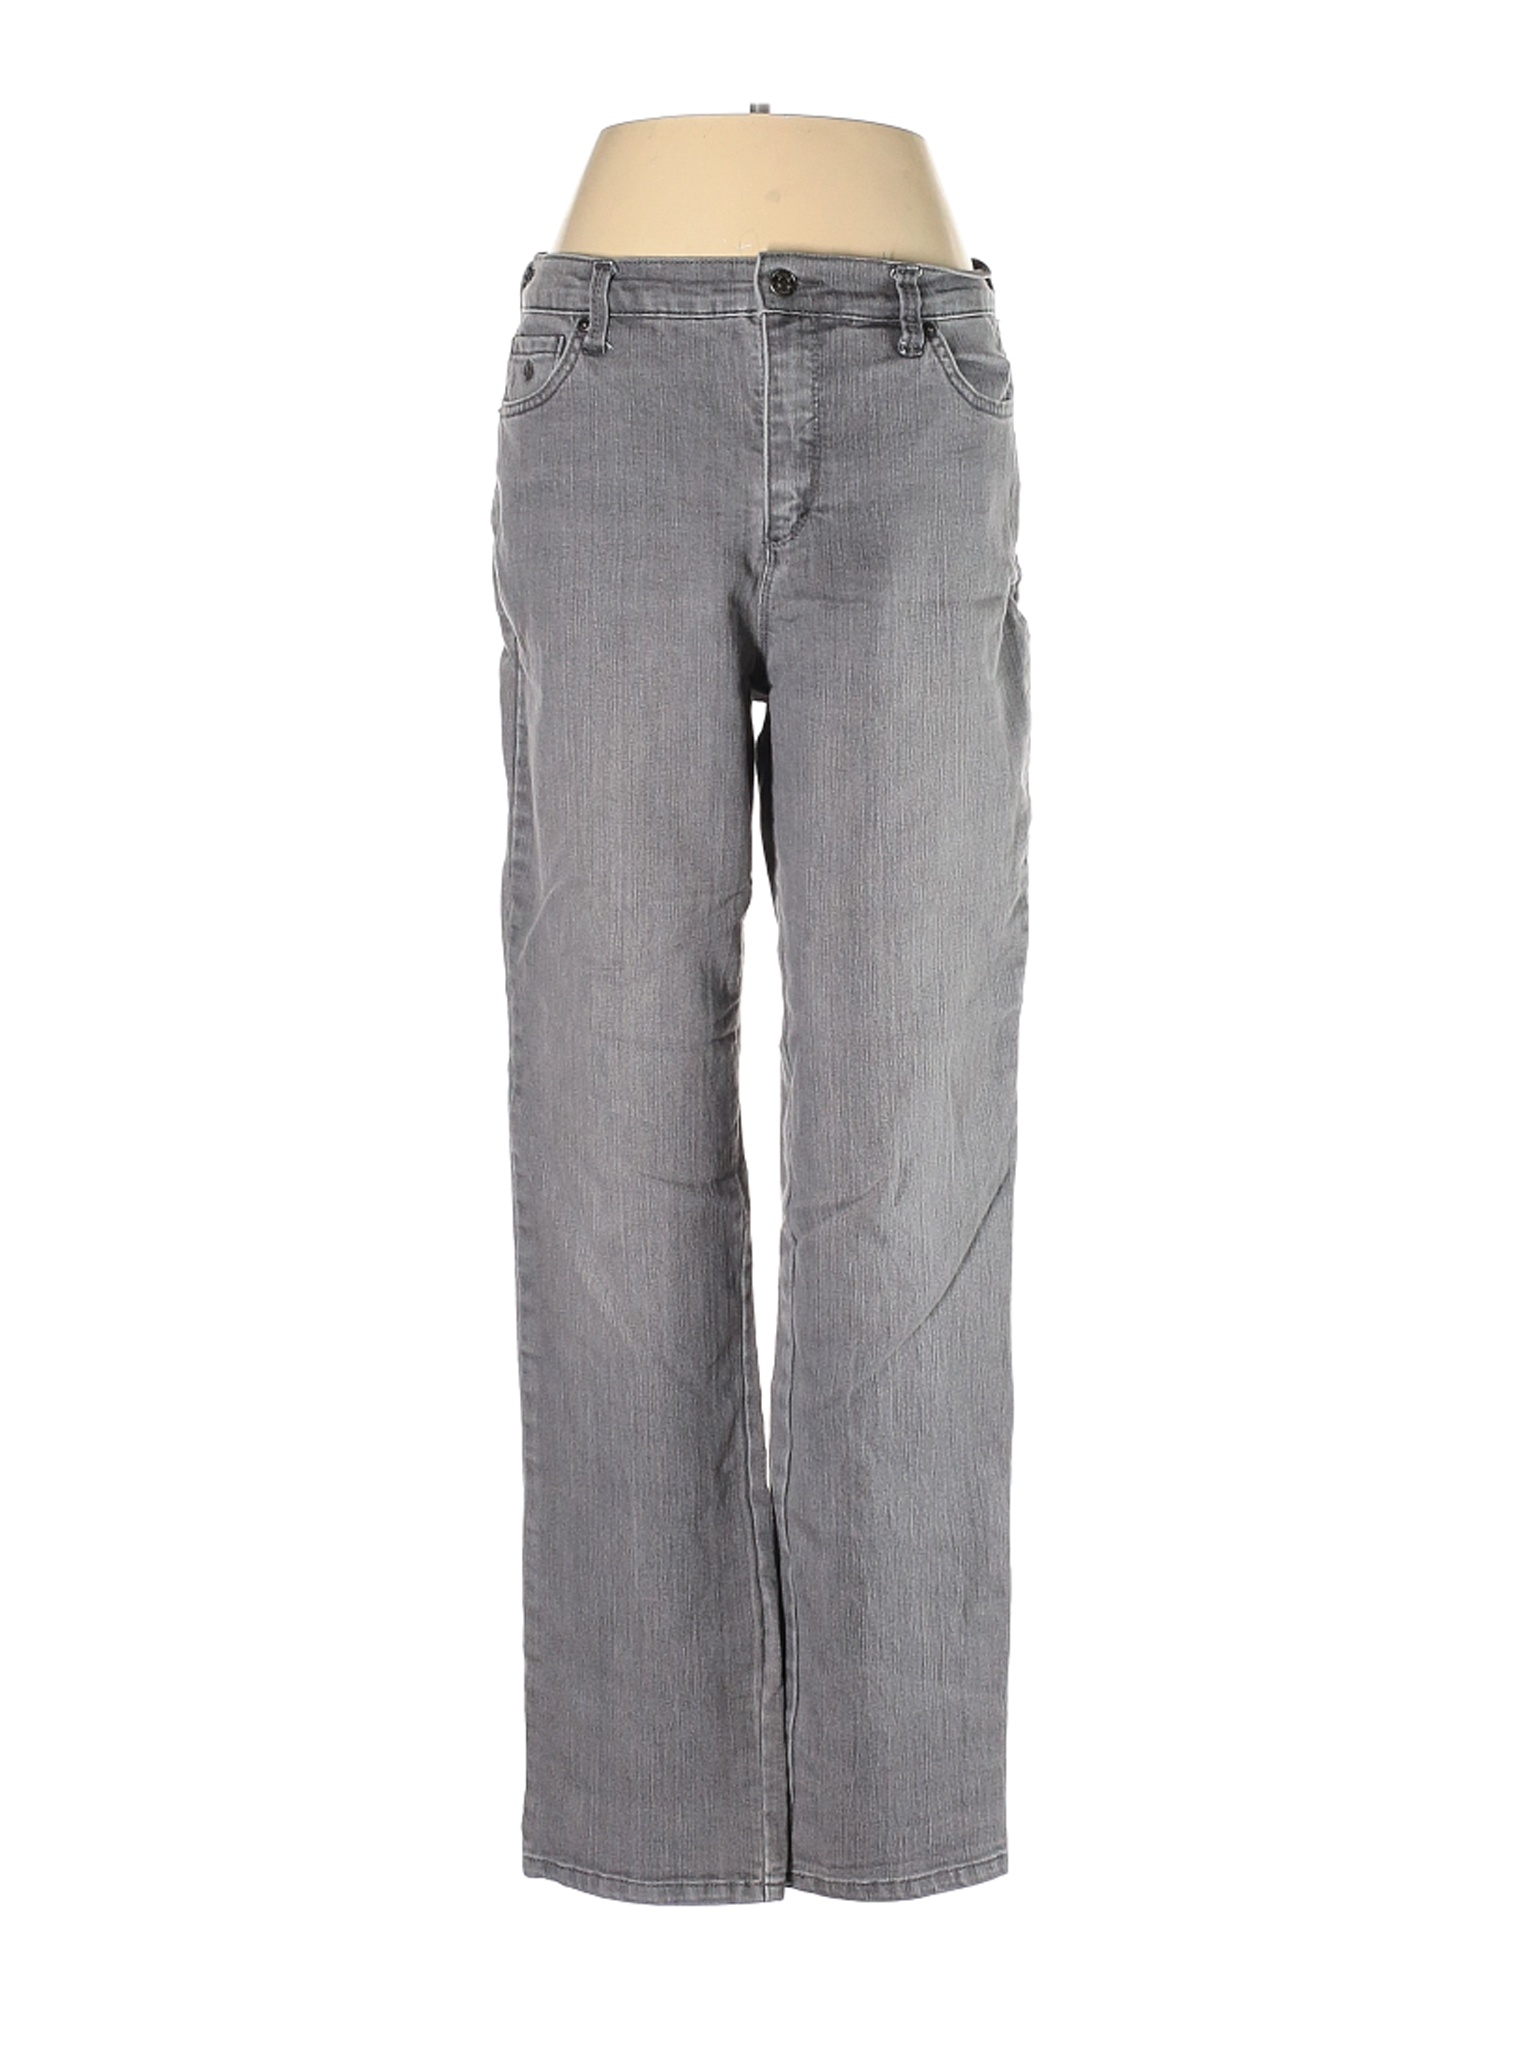 Gloria Vanderbilt Women Gray Jeans 6 | eBay